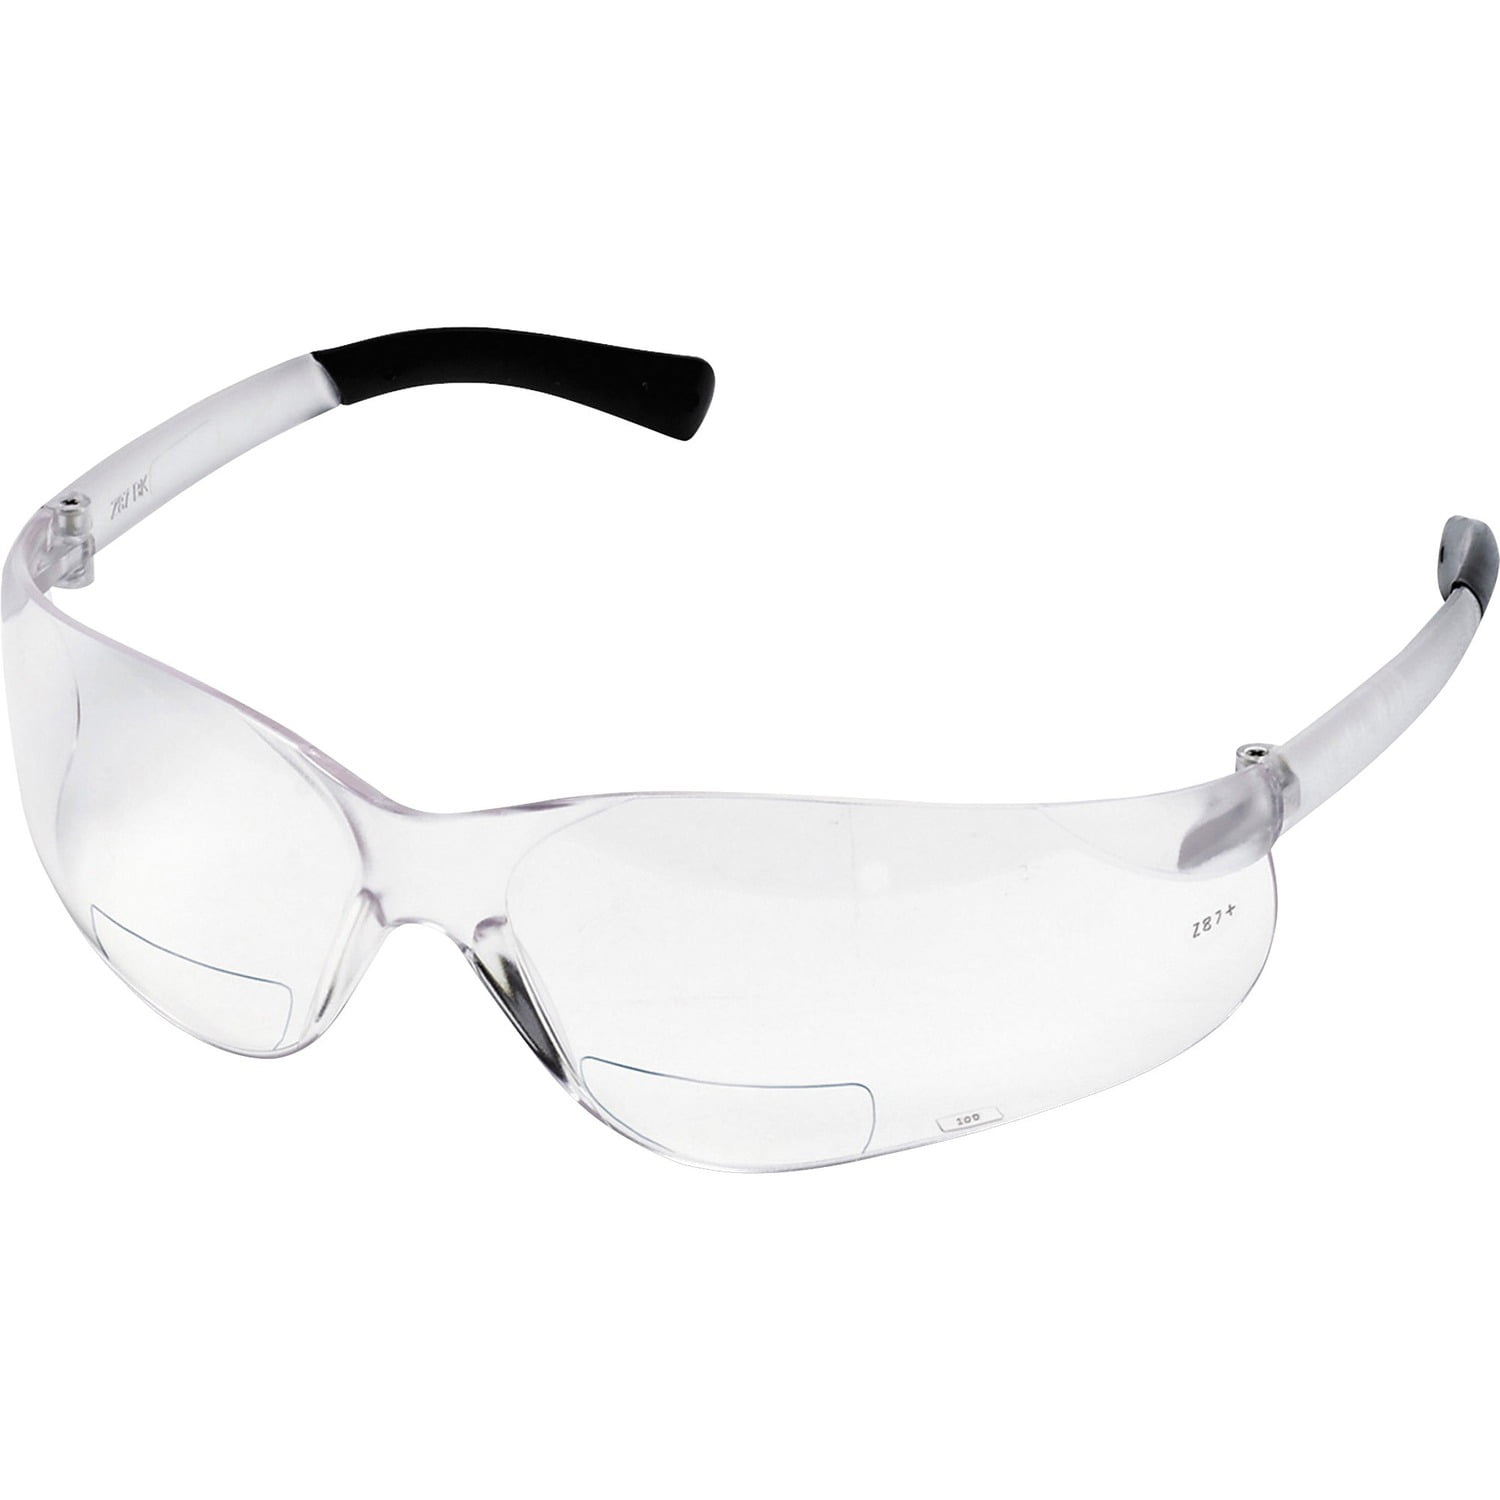 Bearkat Magnifier Safety Glasses Clear Lens Clear Frame 